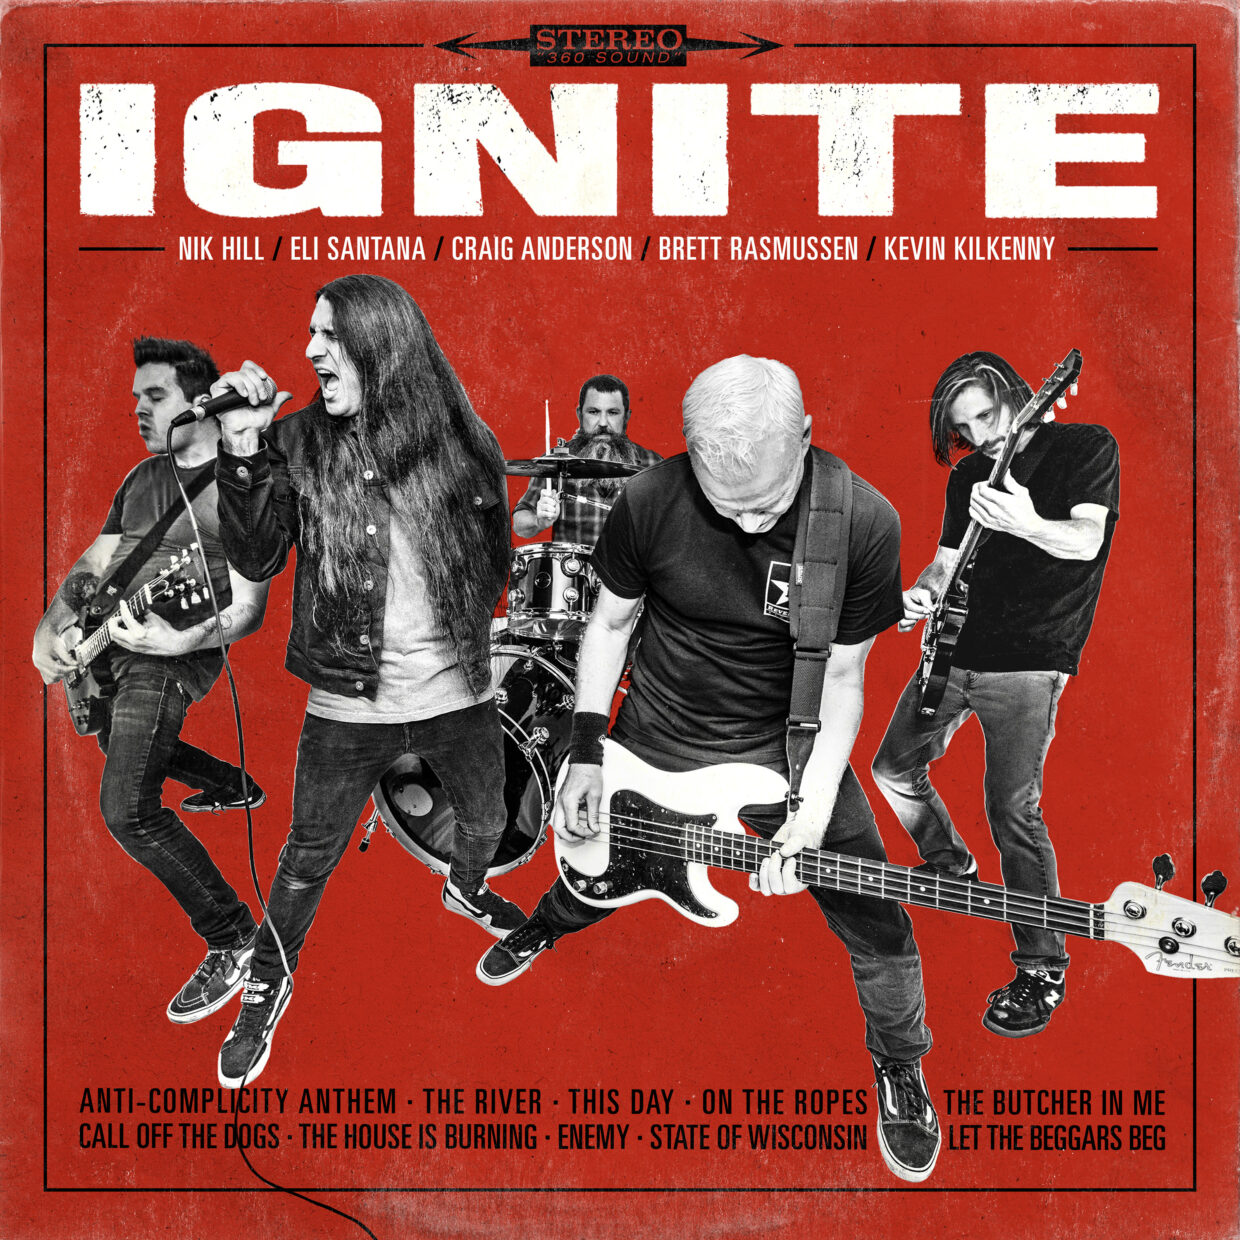 Ignite - Ignite